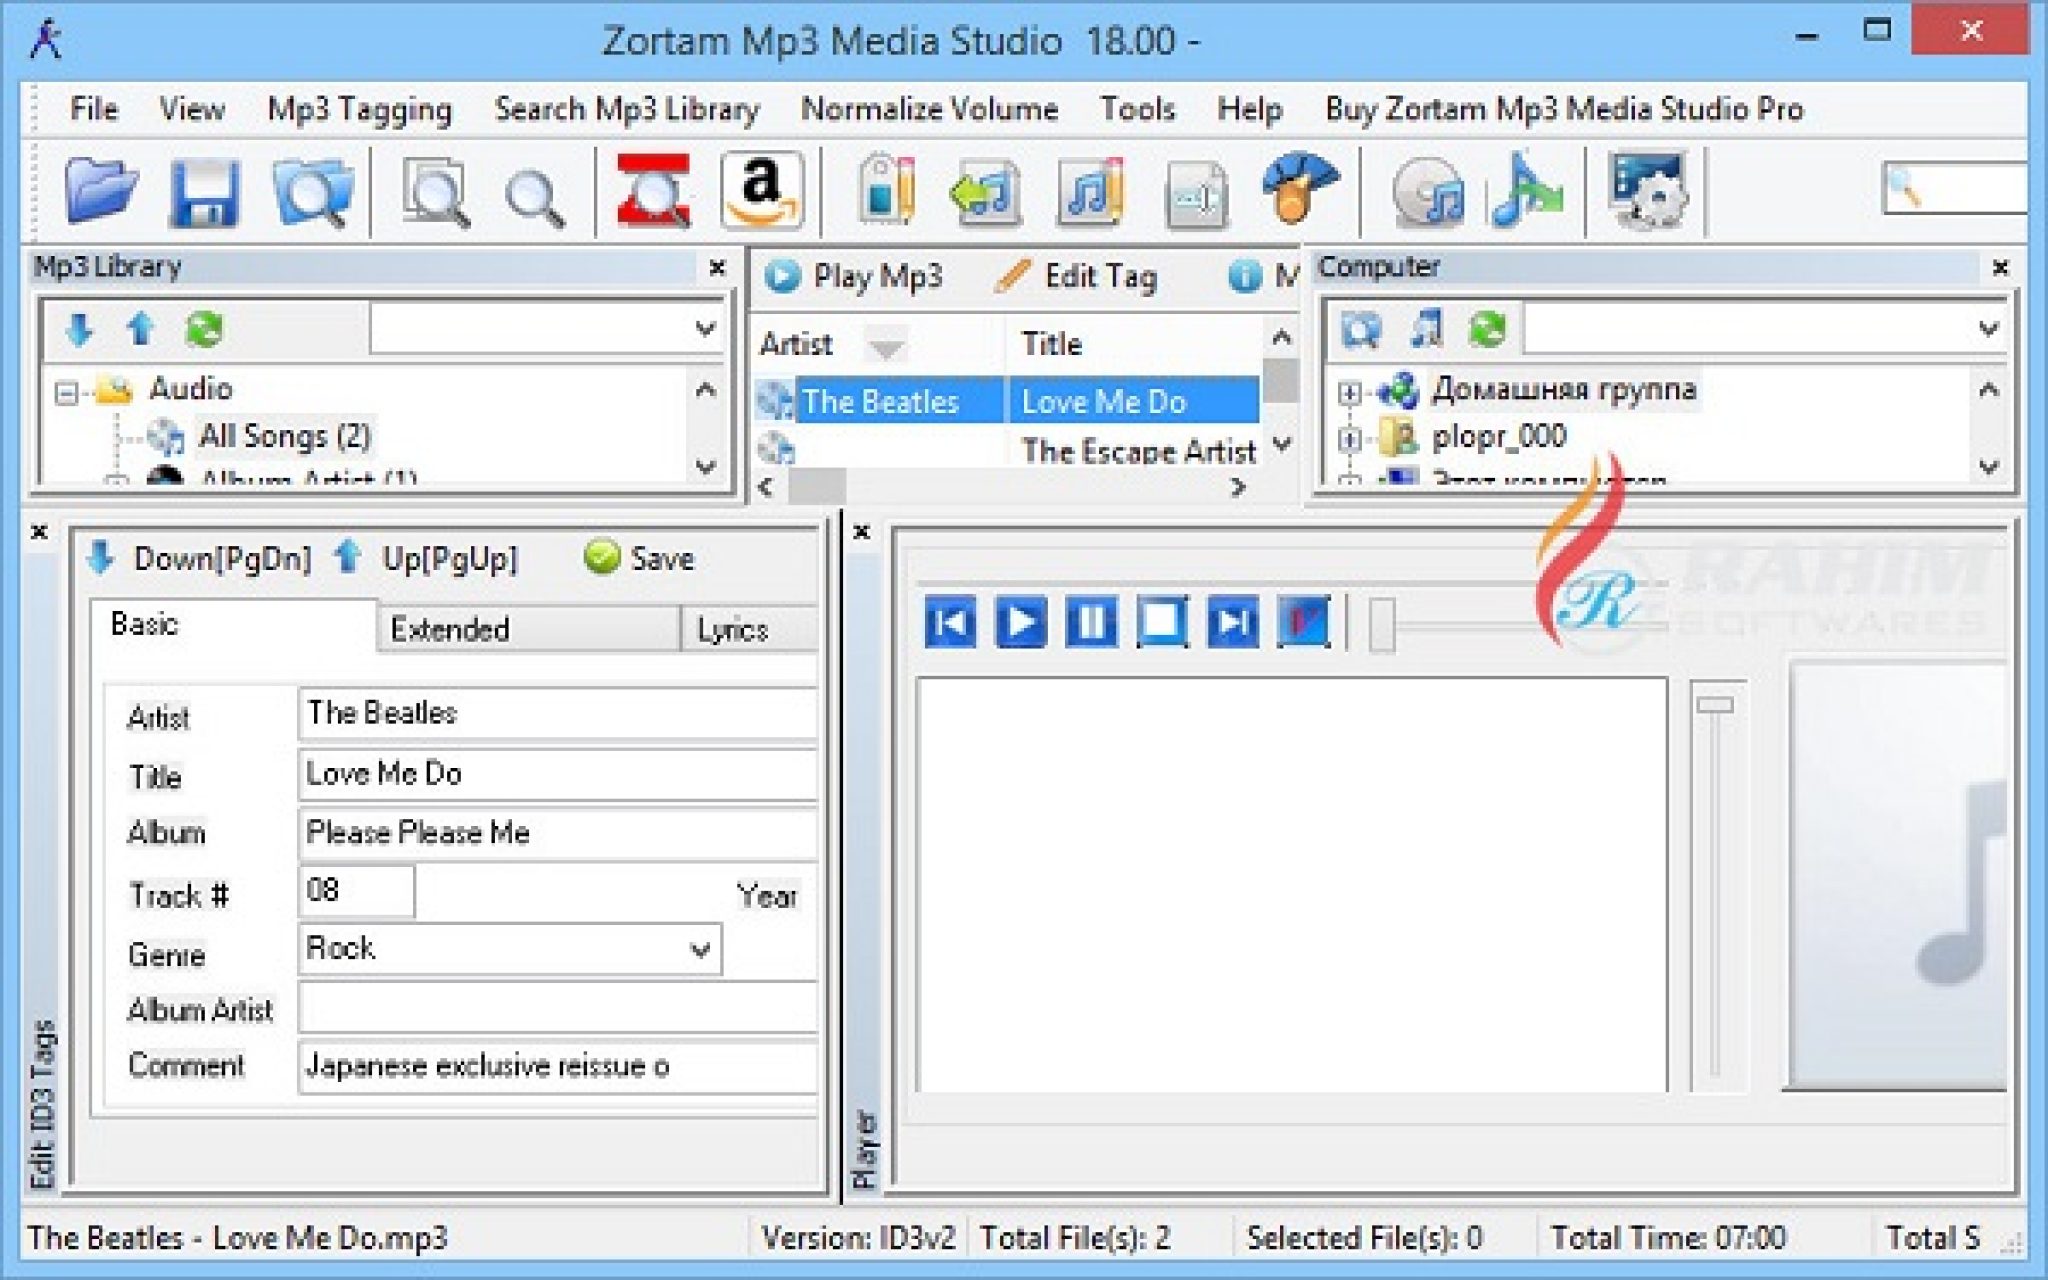 instaling Zortam Mp3 Media Studio Pro 31.10